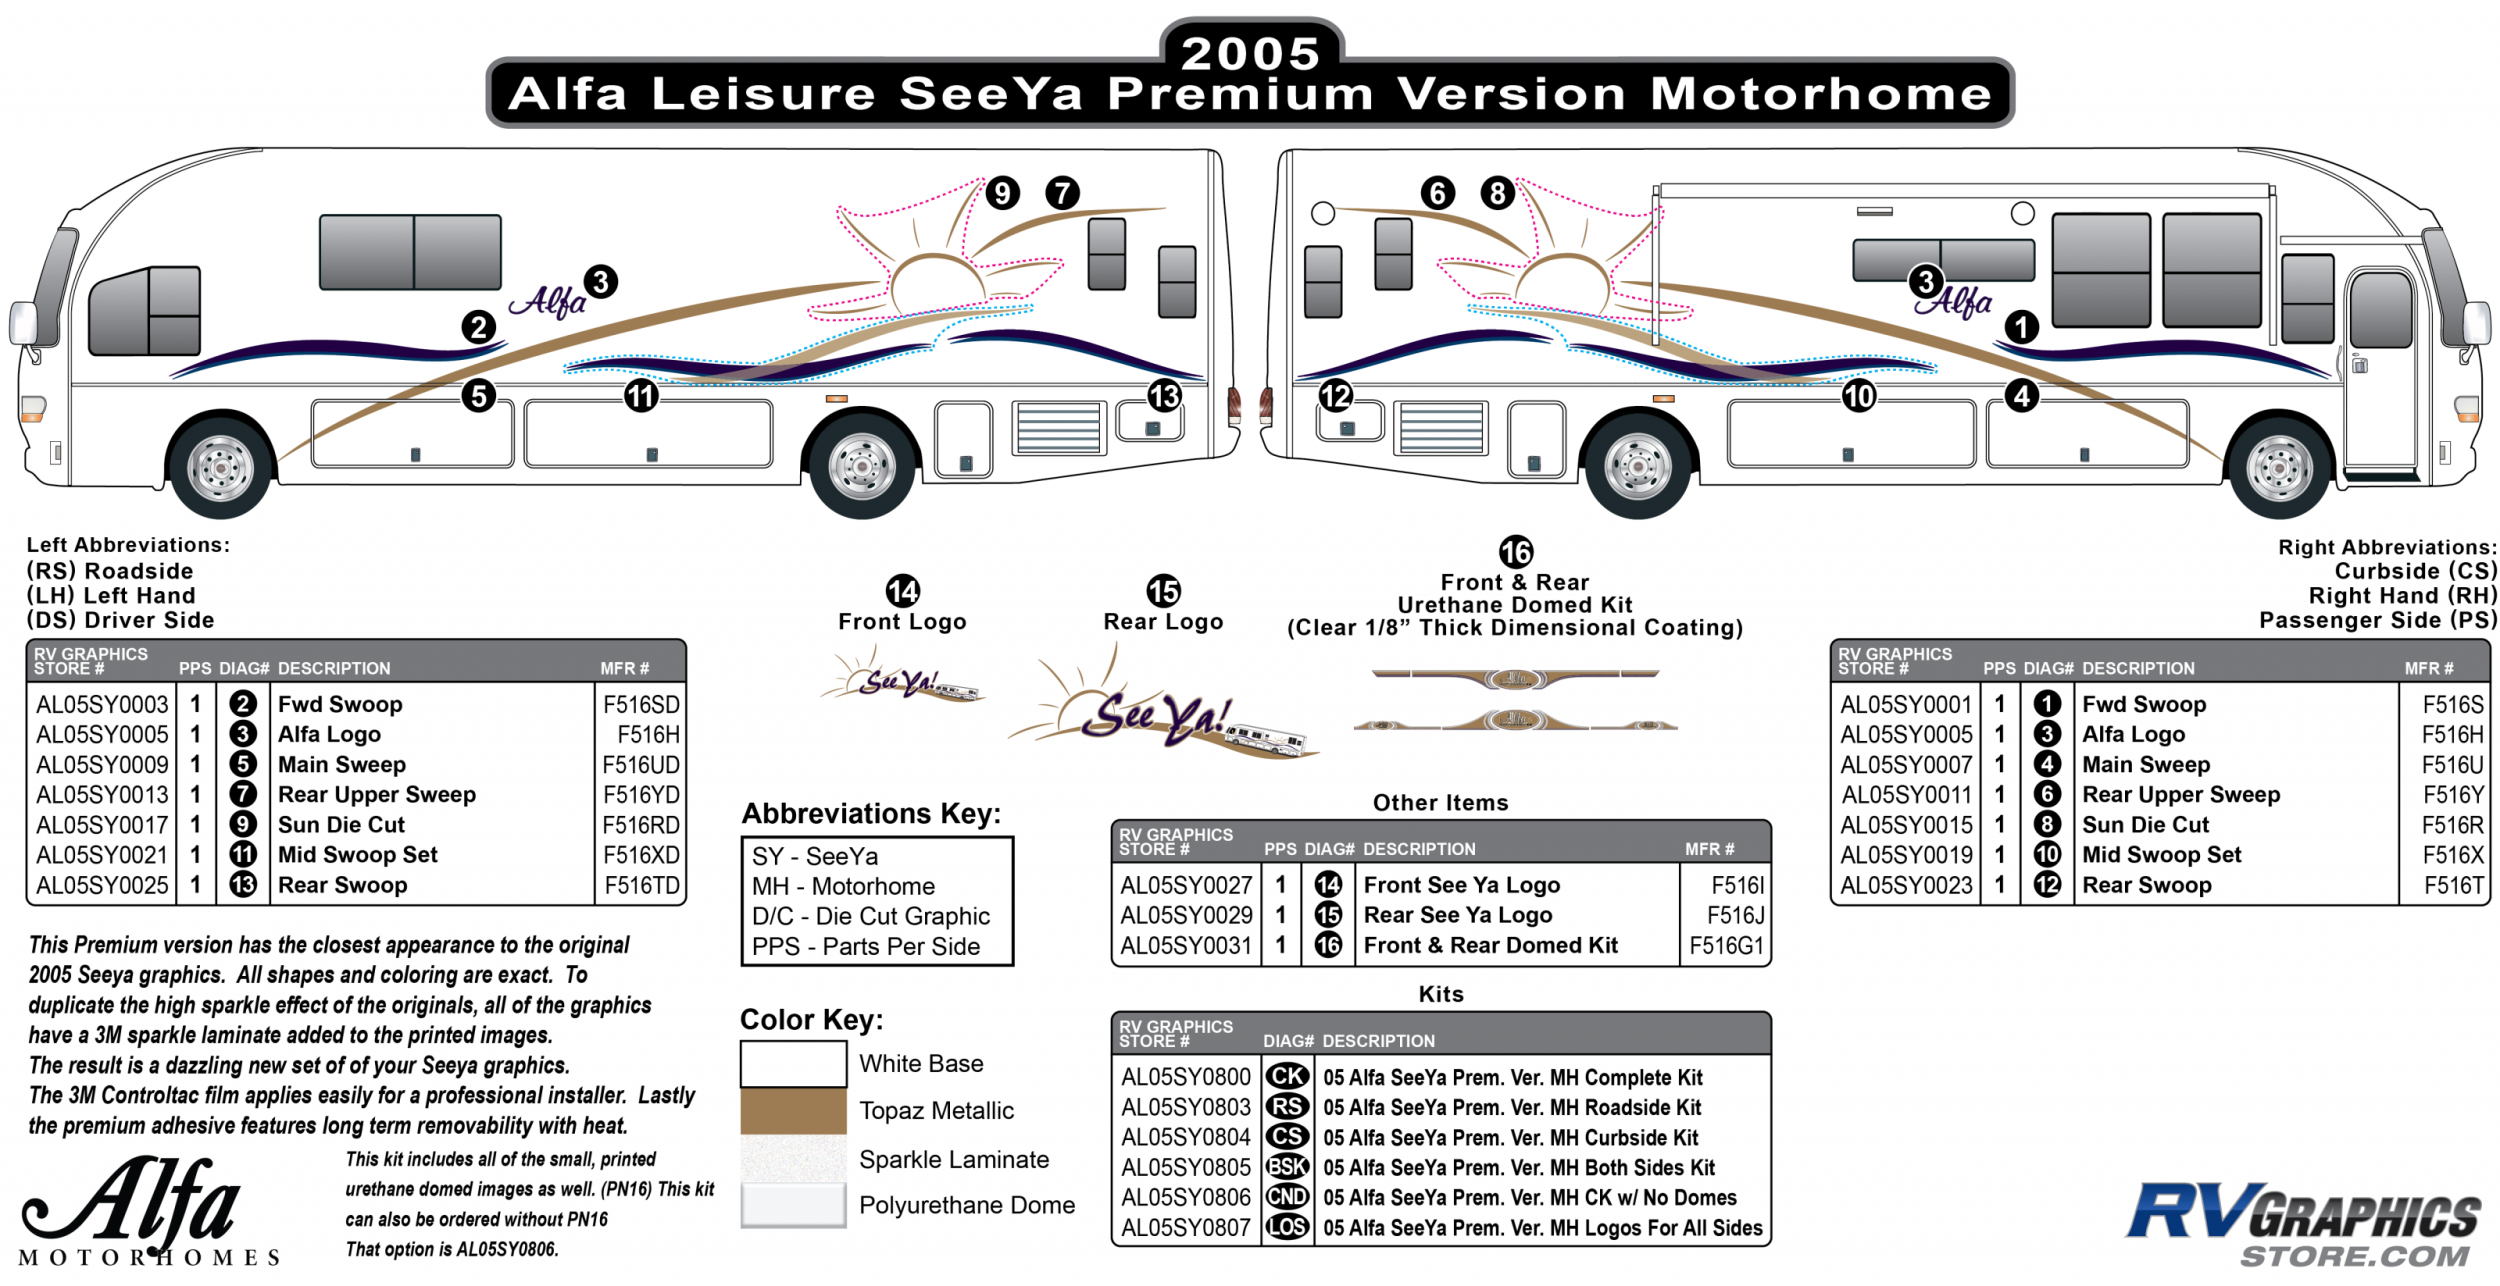 Seeya Motorhome - 2005 Seeya MH-Motorhome Premium Version